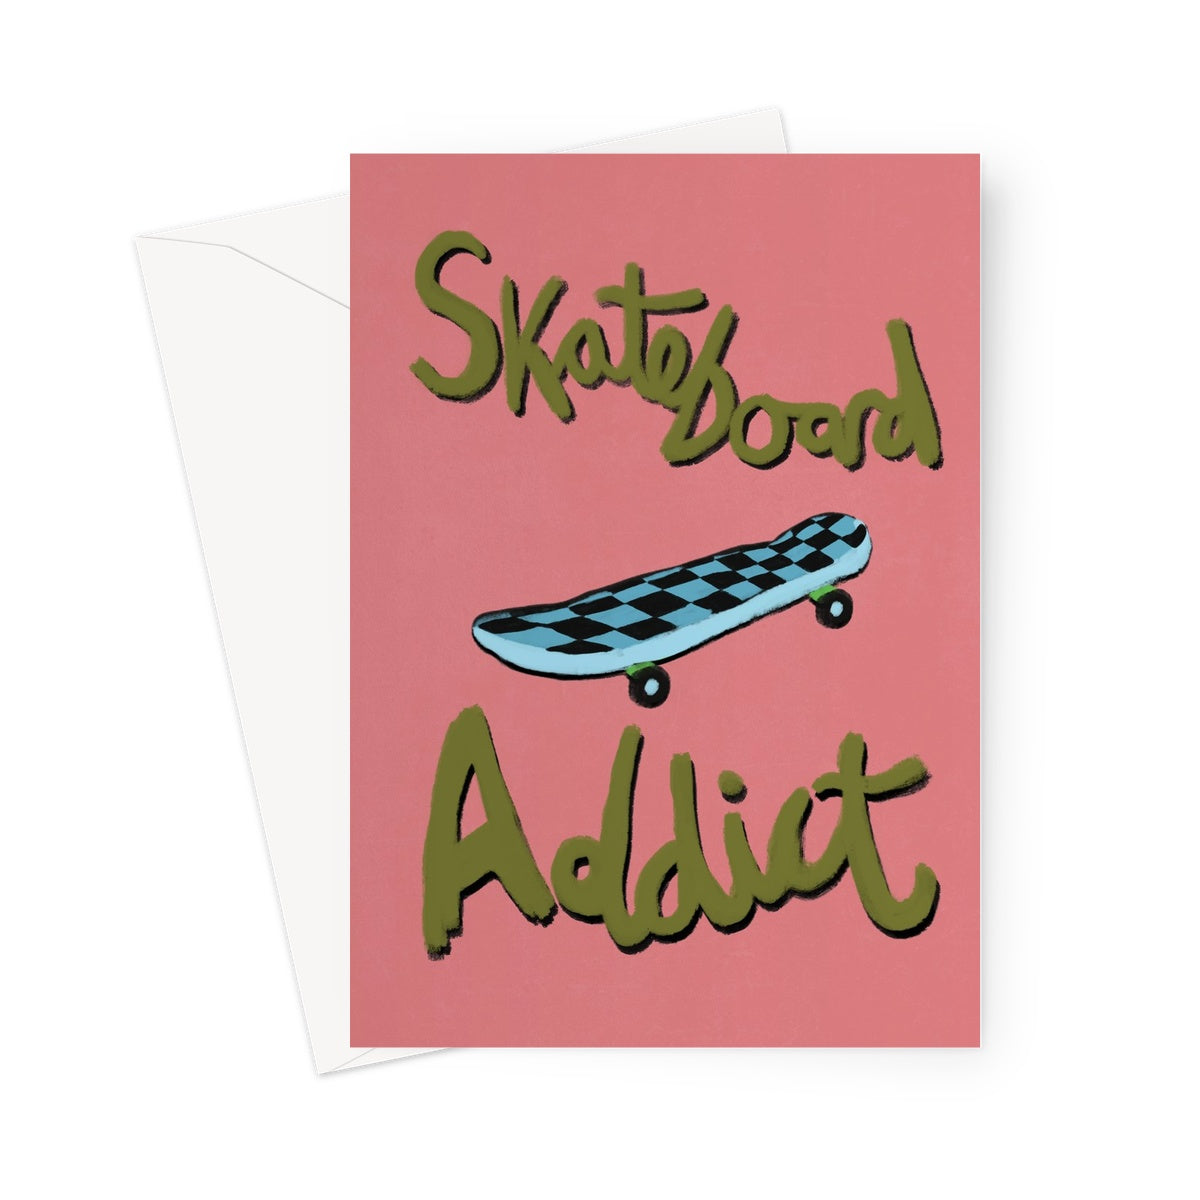 Skateboard Addict - Coral, Olive Green, Blue Greeting Card